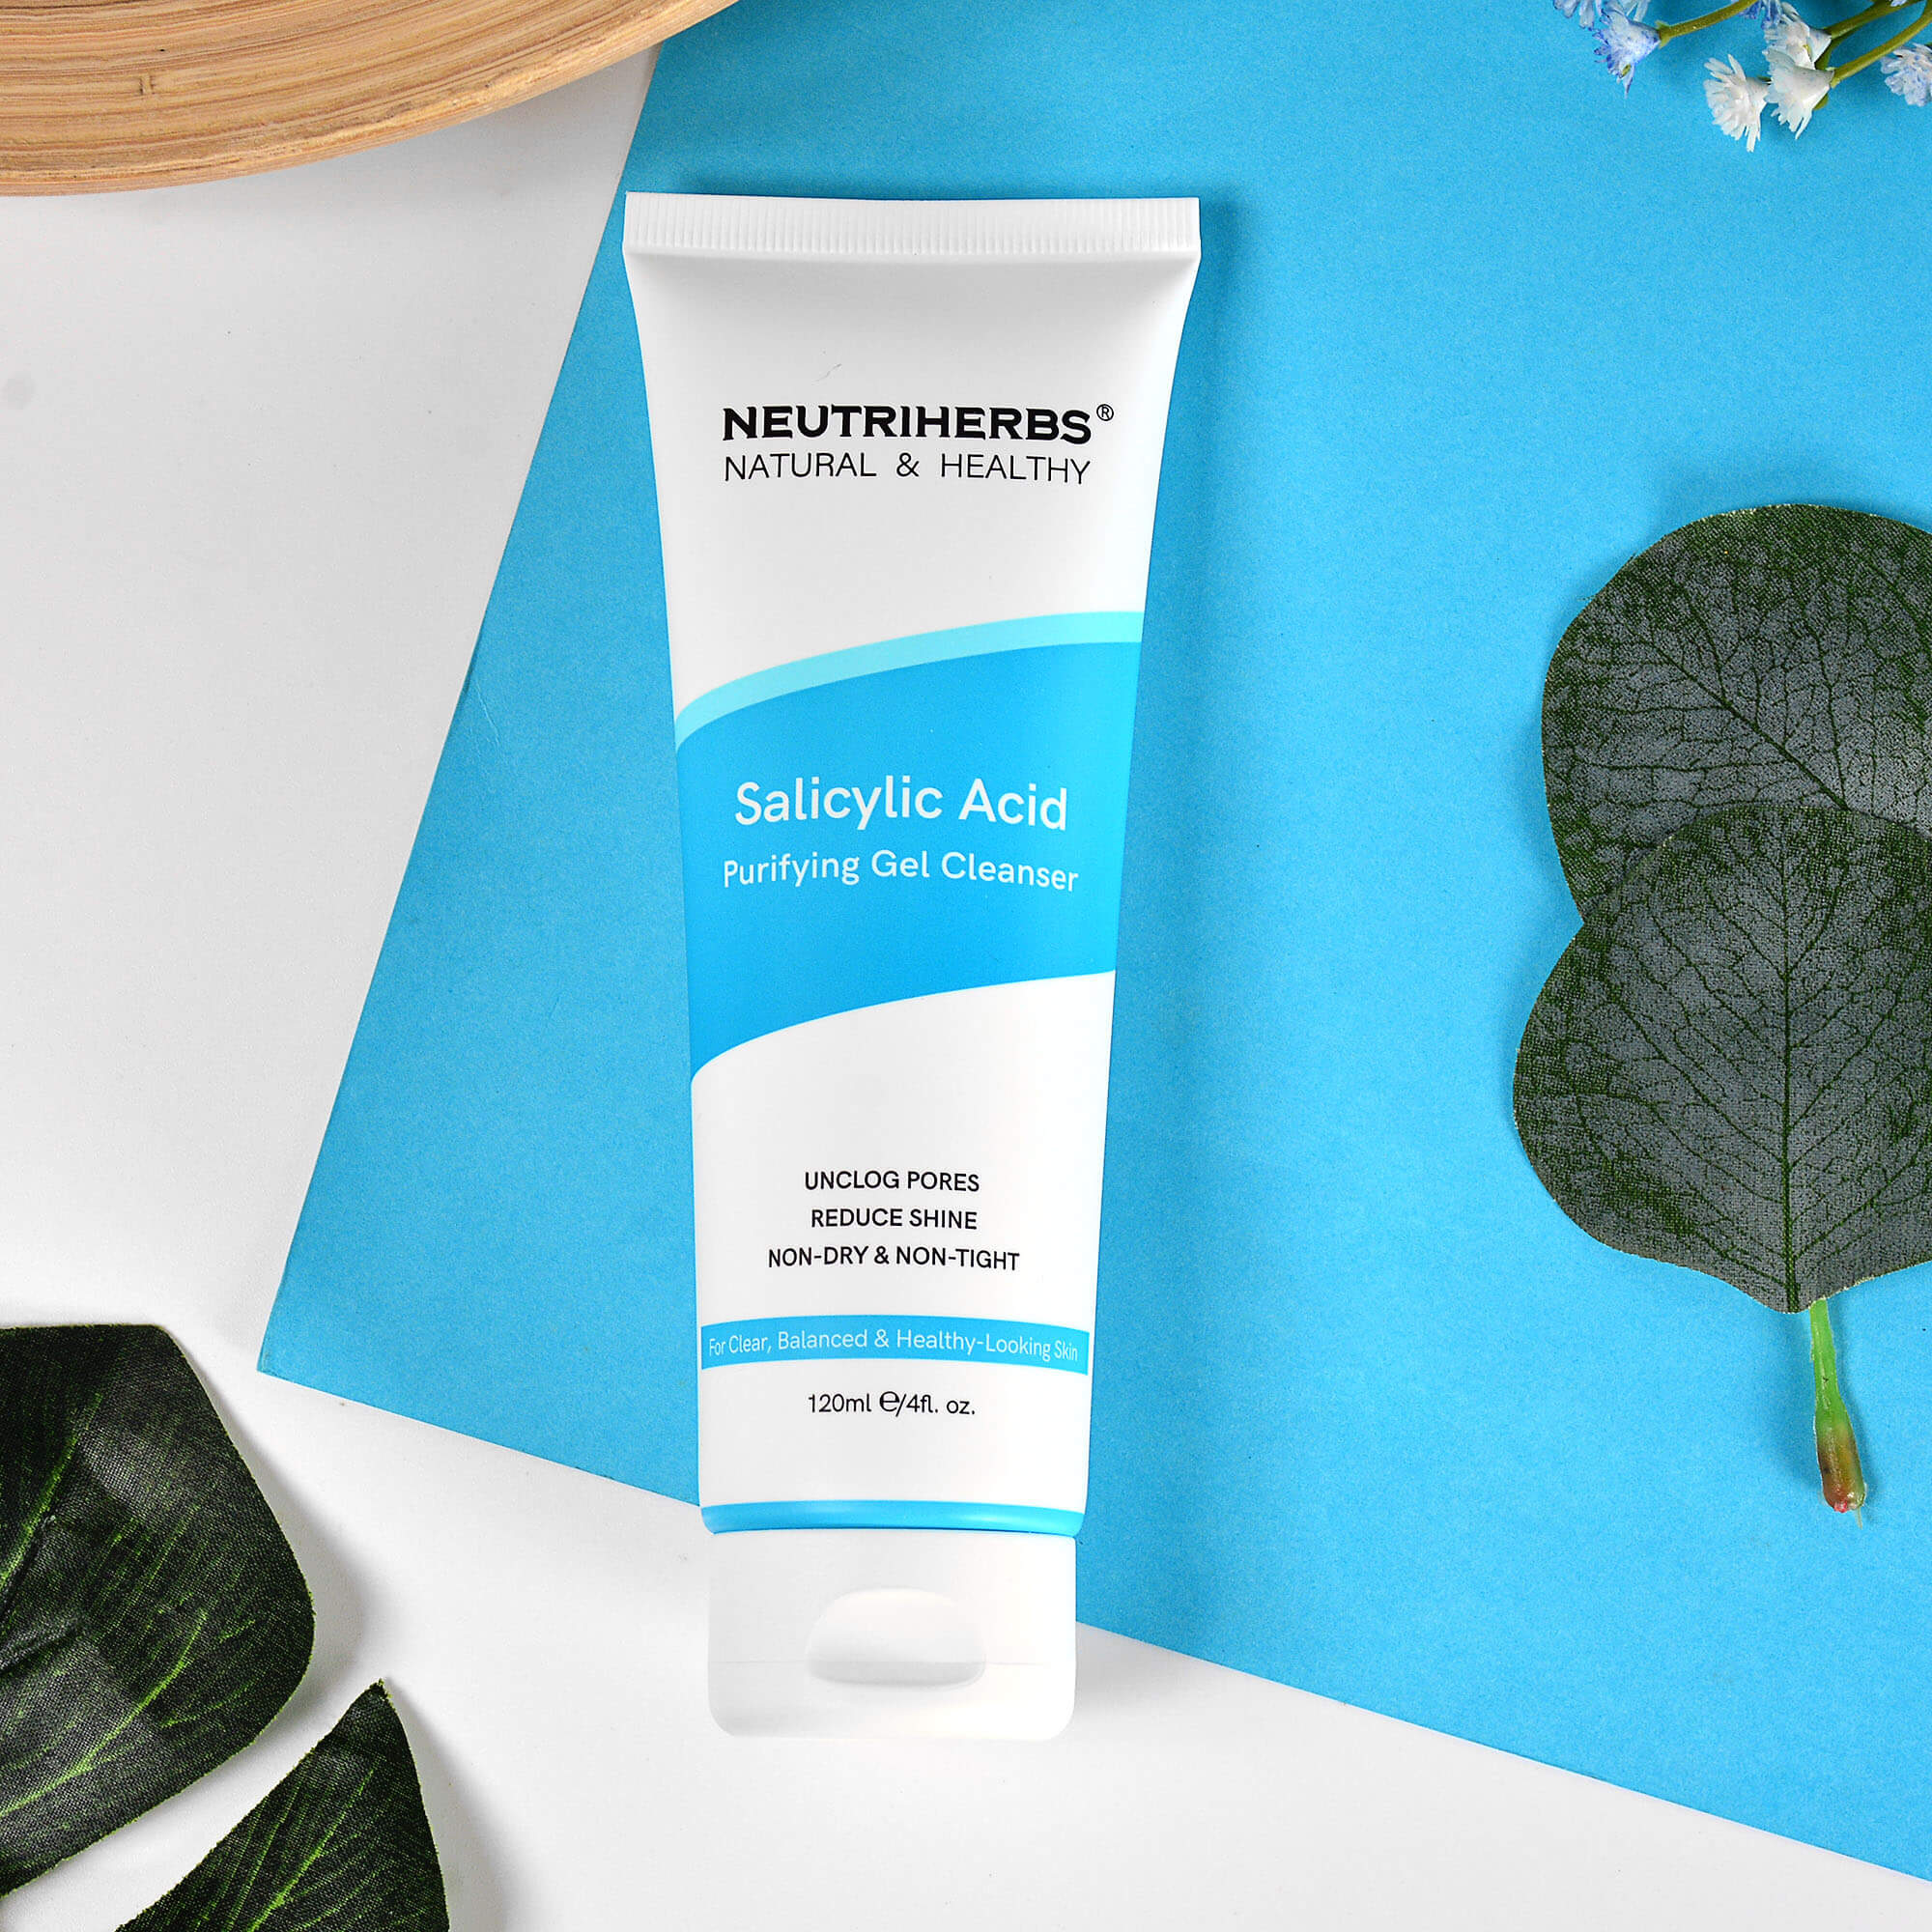 Neutriherbs best salicylic acid face wash ideal for oily/acne-prone skin